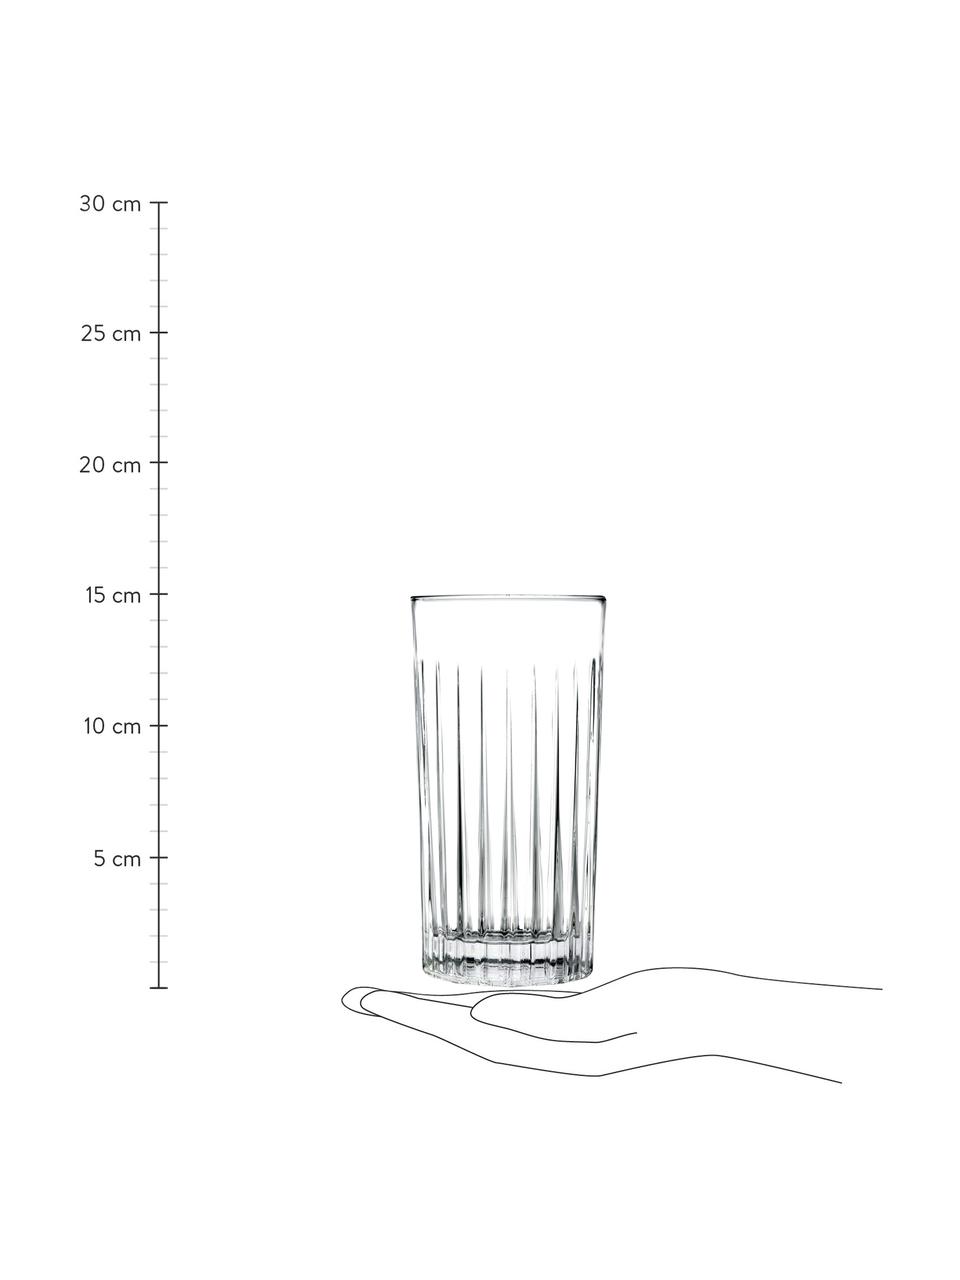 Kristall-Longdrinkgläser Timeless mit Rillenrelief, 6 Stück, Luxion-Kristallglas, Transparent, Ø 8 x H 15 cm, 440 ml